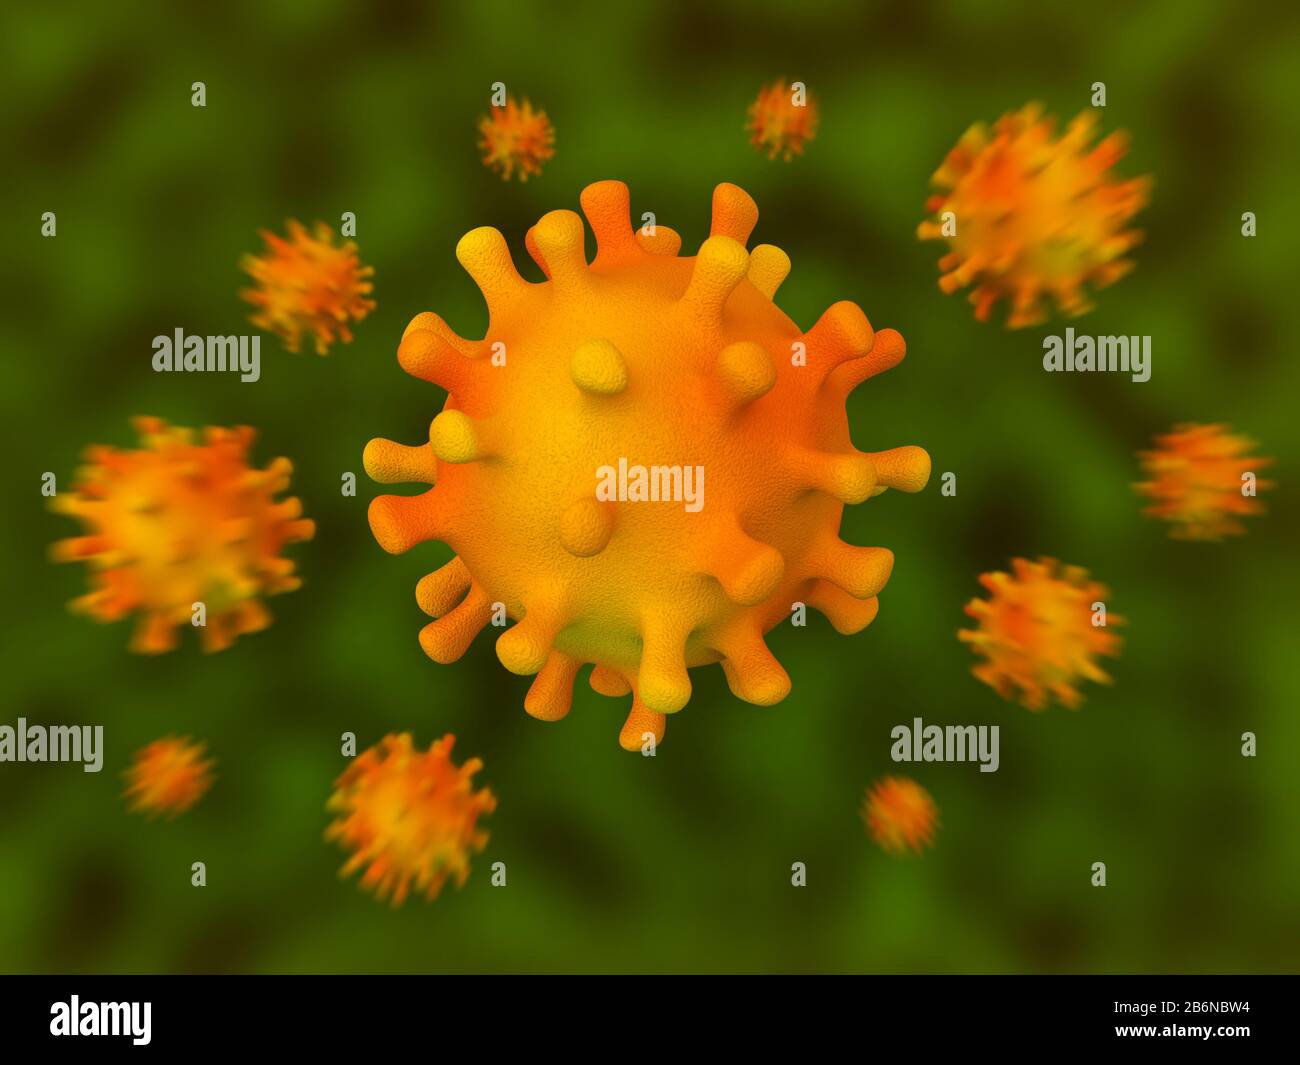 Virus, Coronavirus, Flu, HIV, Influenza. 3d Rendering Concept Illustration. Epidemic, Flu, Global Pandemic, outbreak. Stock Photo